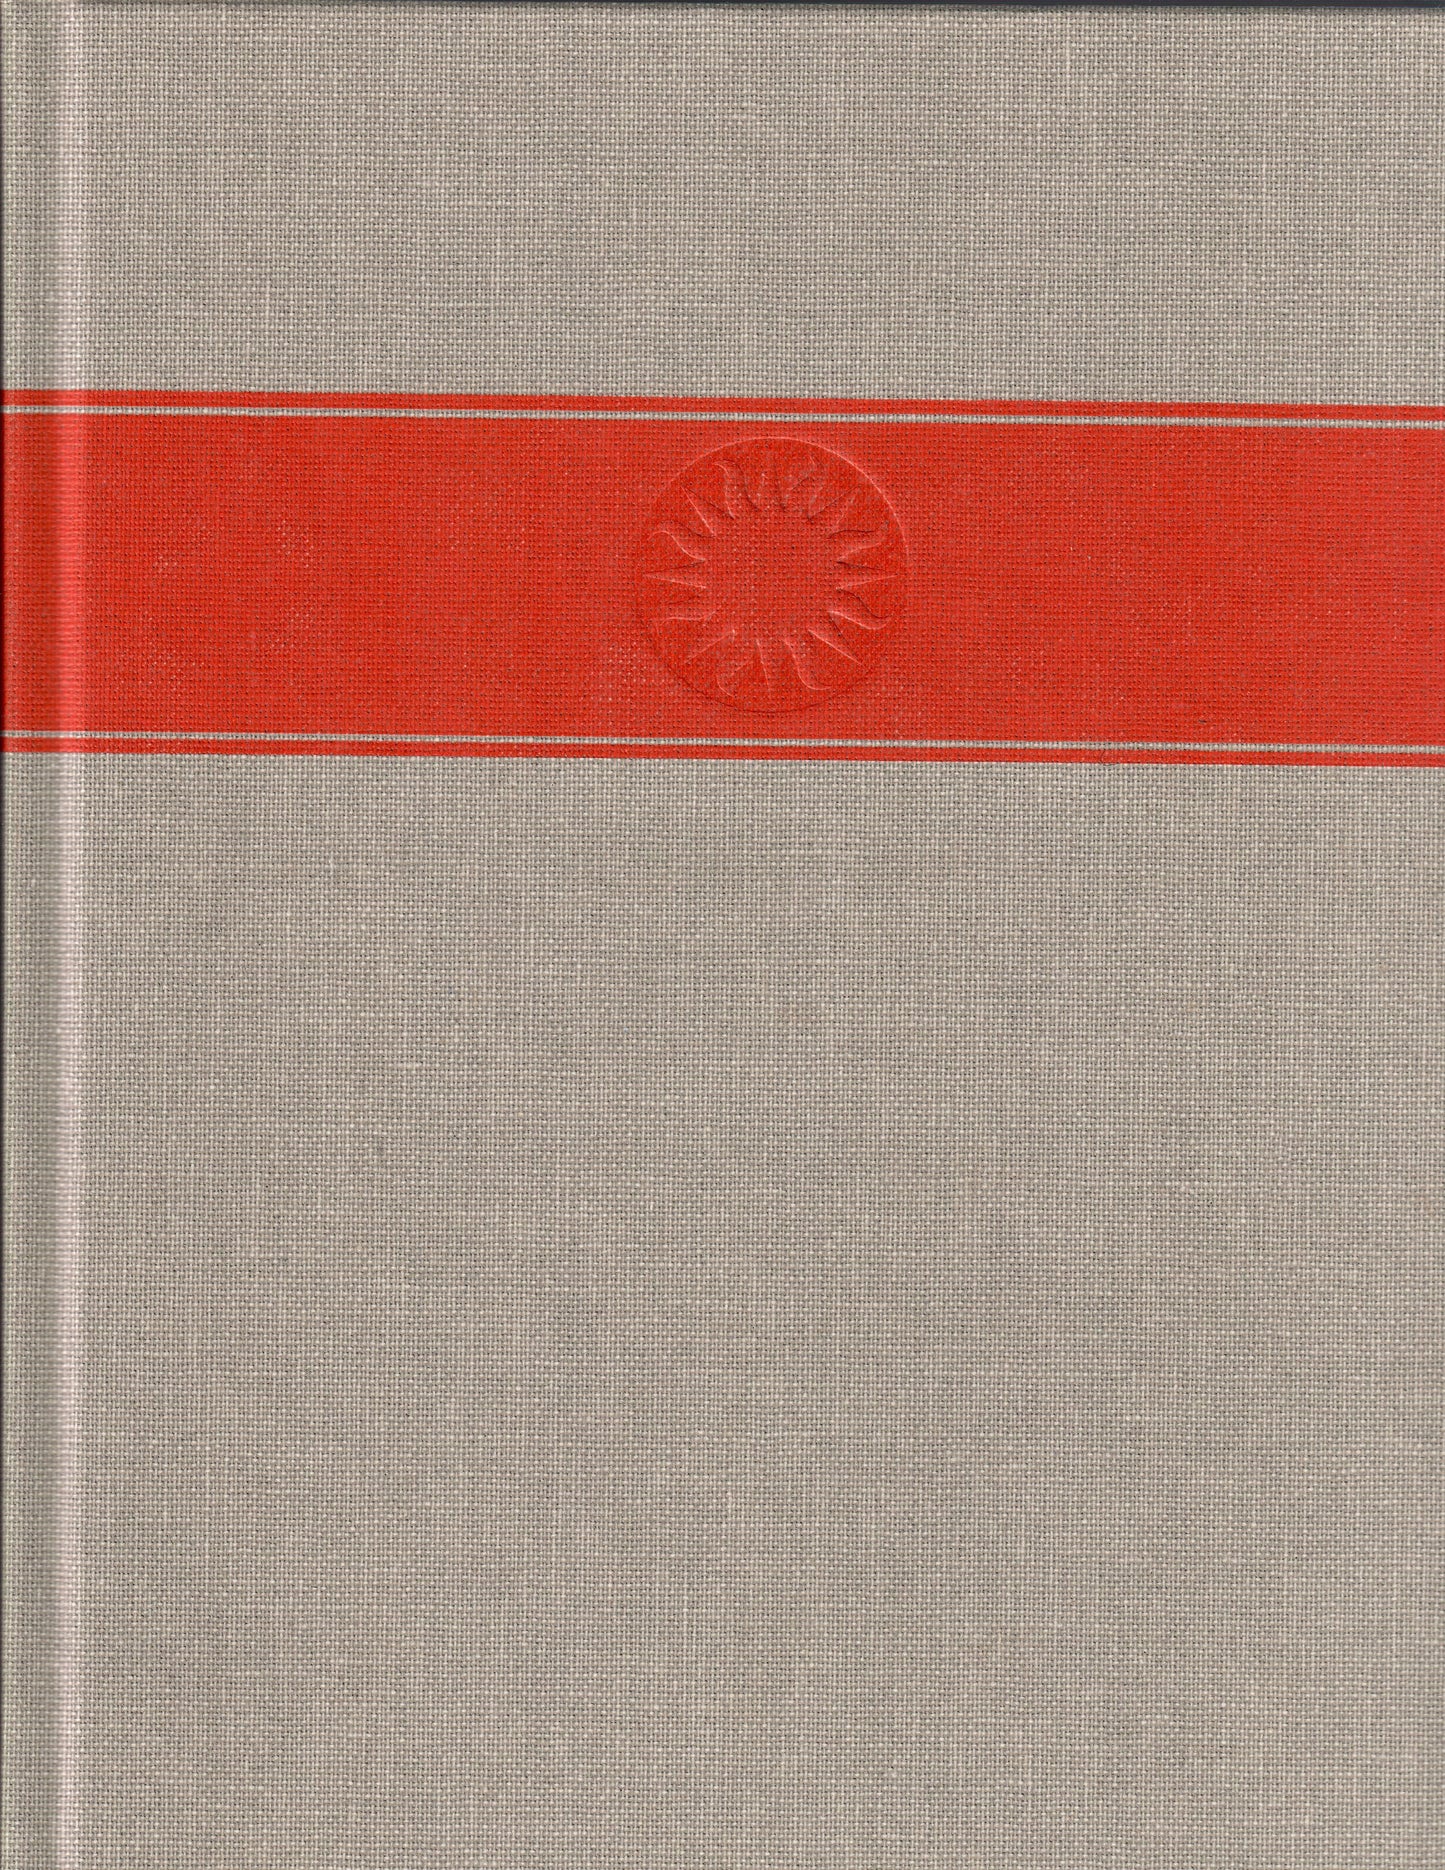 Book- Smithsonian, Handbook of North American Indians Volume 7, Northwest Coast